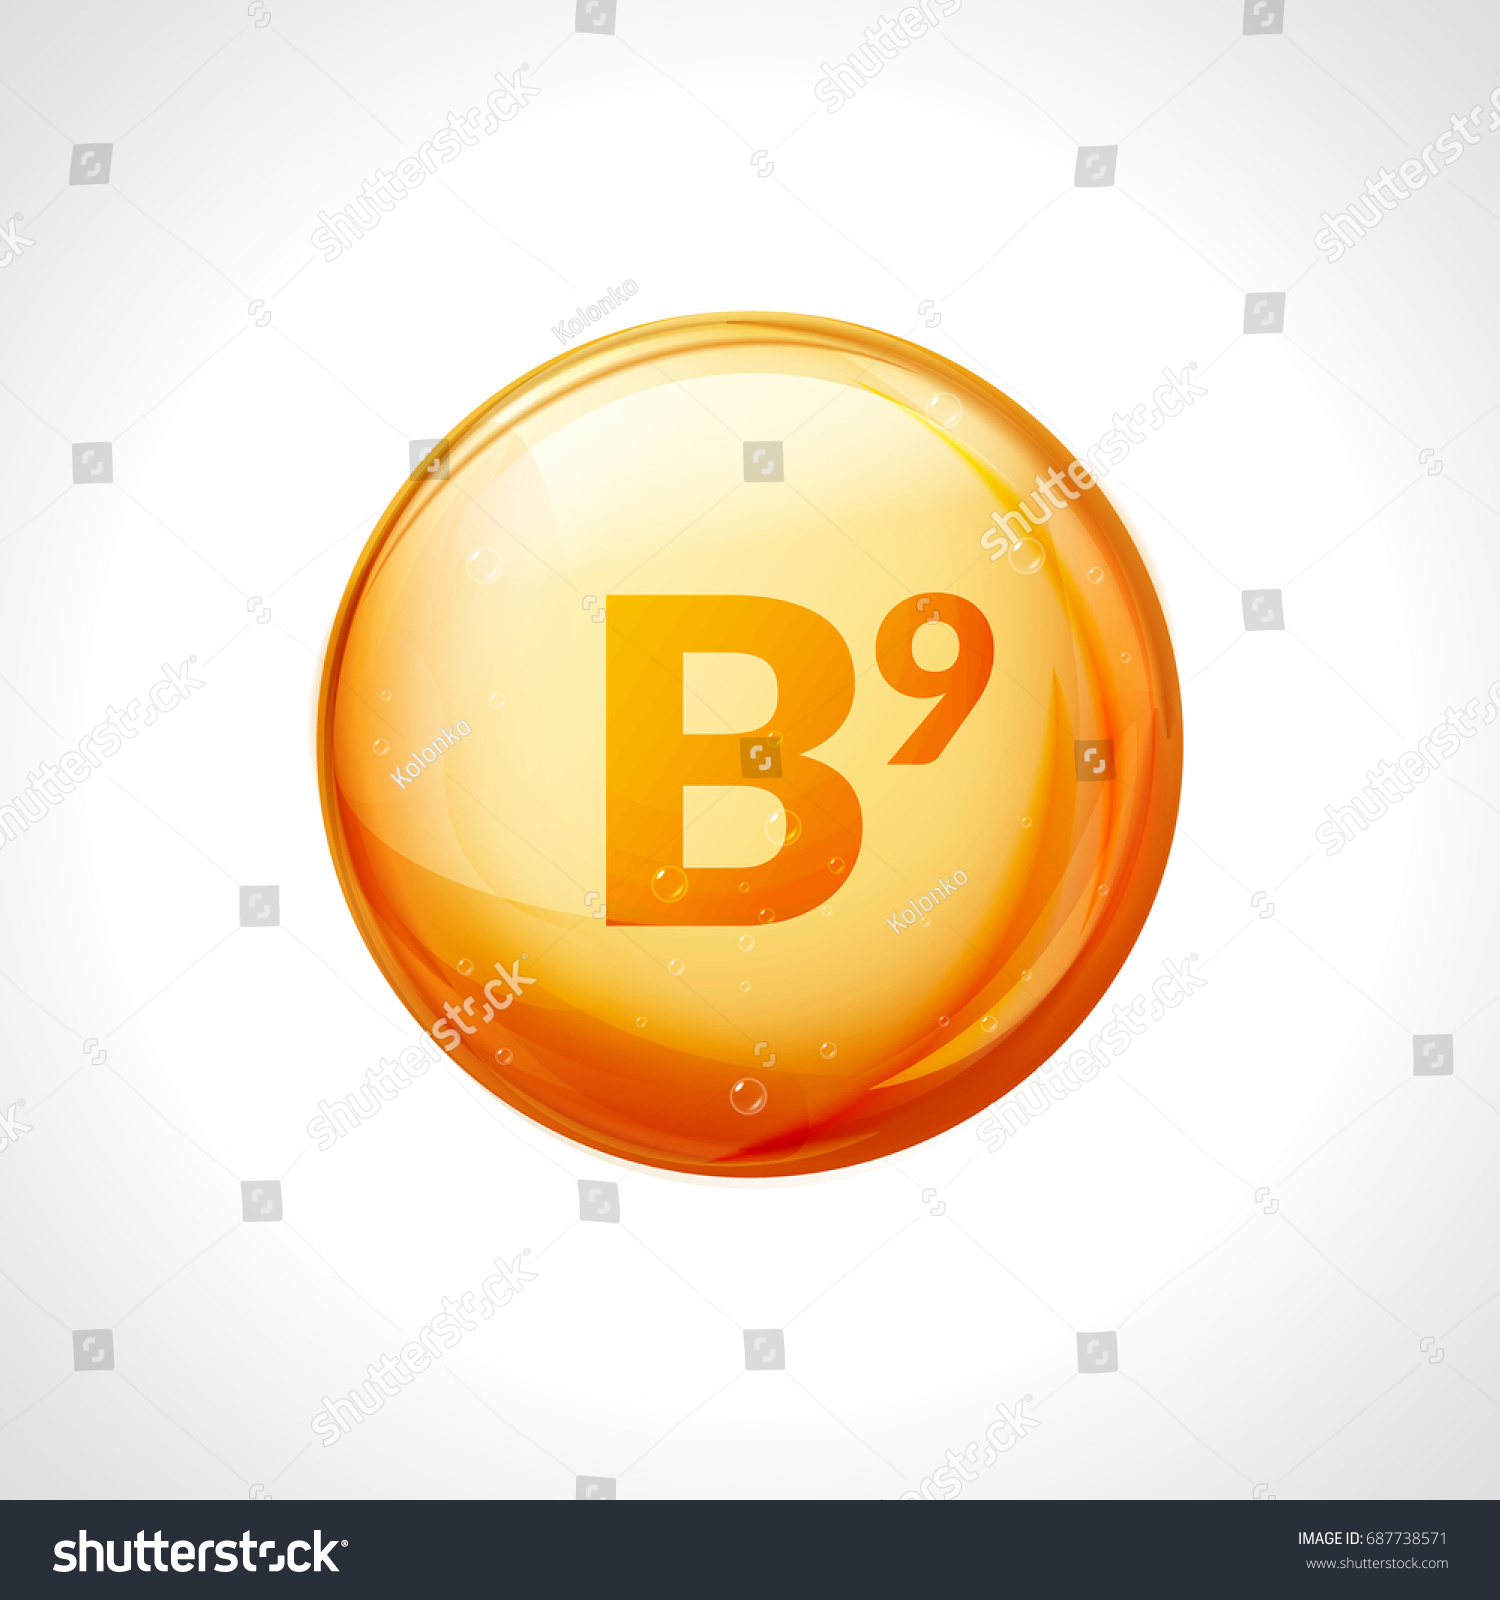 Vitamin B9 gold icon. Folic acid treatment skin care. Healthy pill natural medicine vitamin nutrition. #687738571